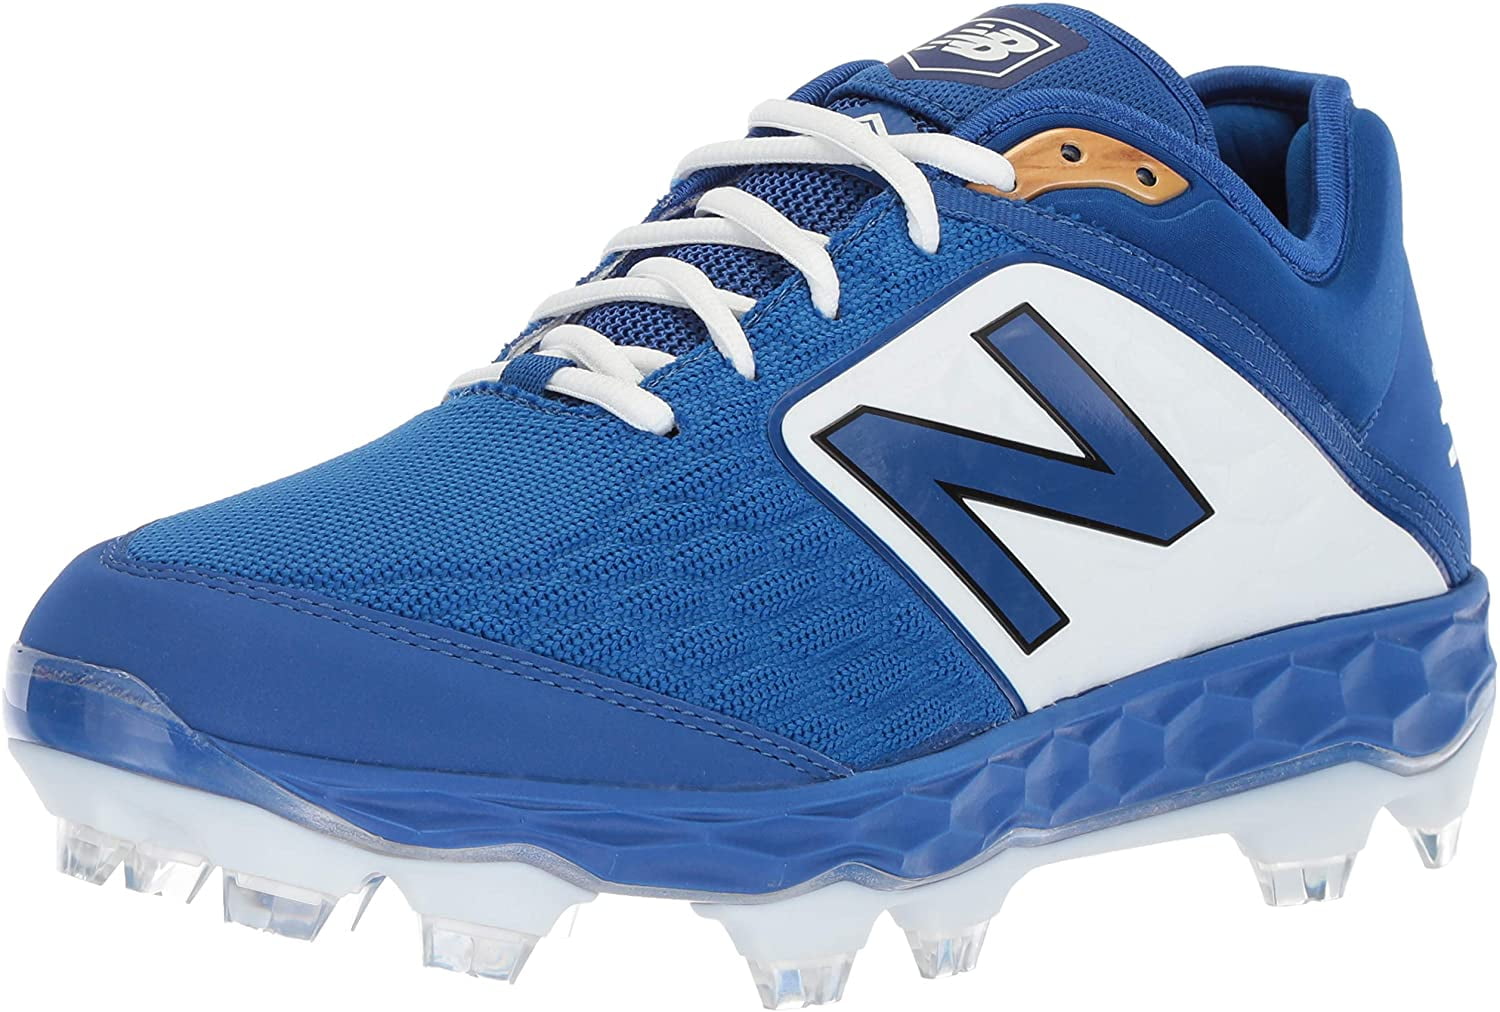 New Balance Men's 3000 V4 TPU Molded Baseball Shoe, Royal/White, 14 M ...